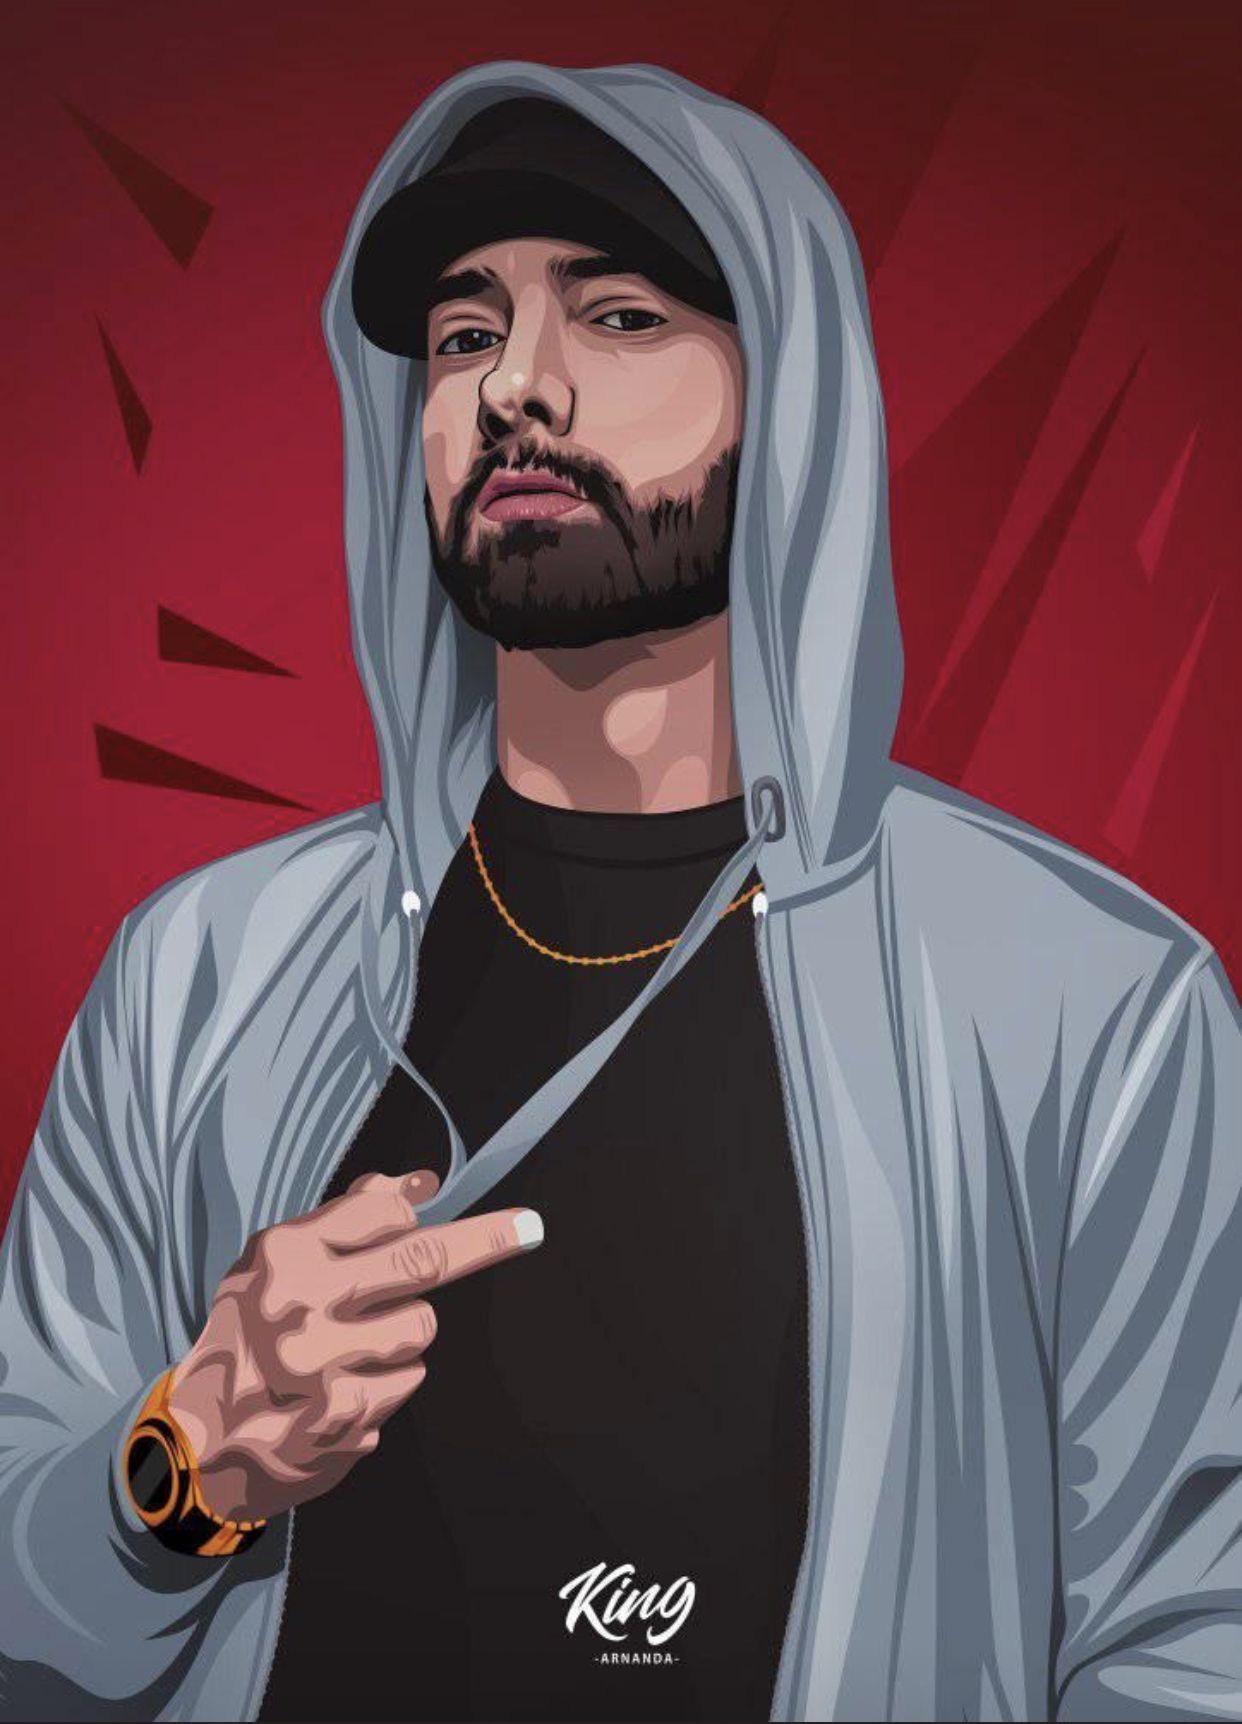 Eminem Cartoon Wallpaper Free .wallpaperaccess.com